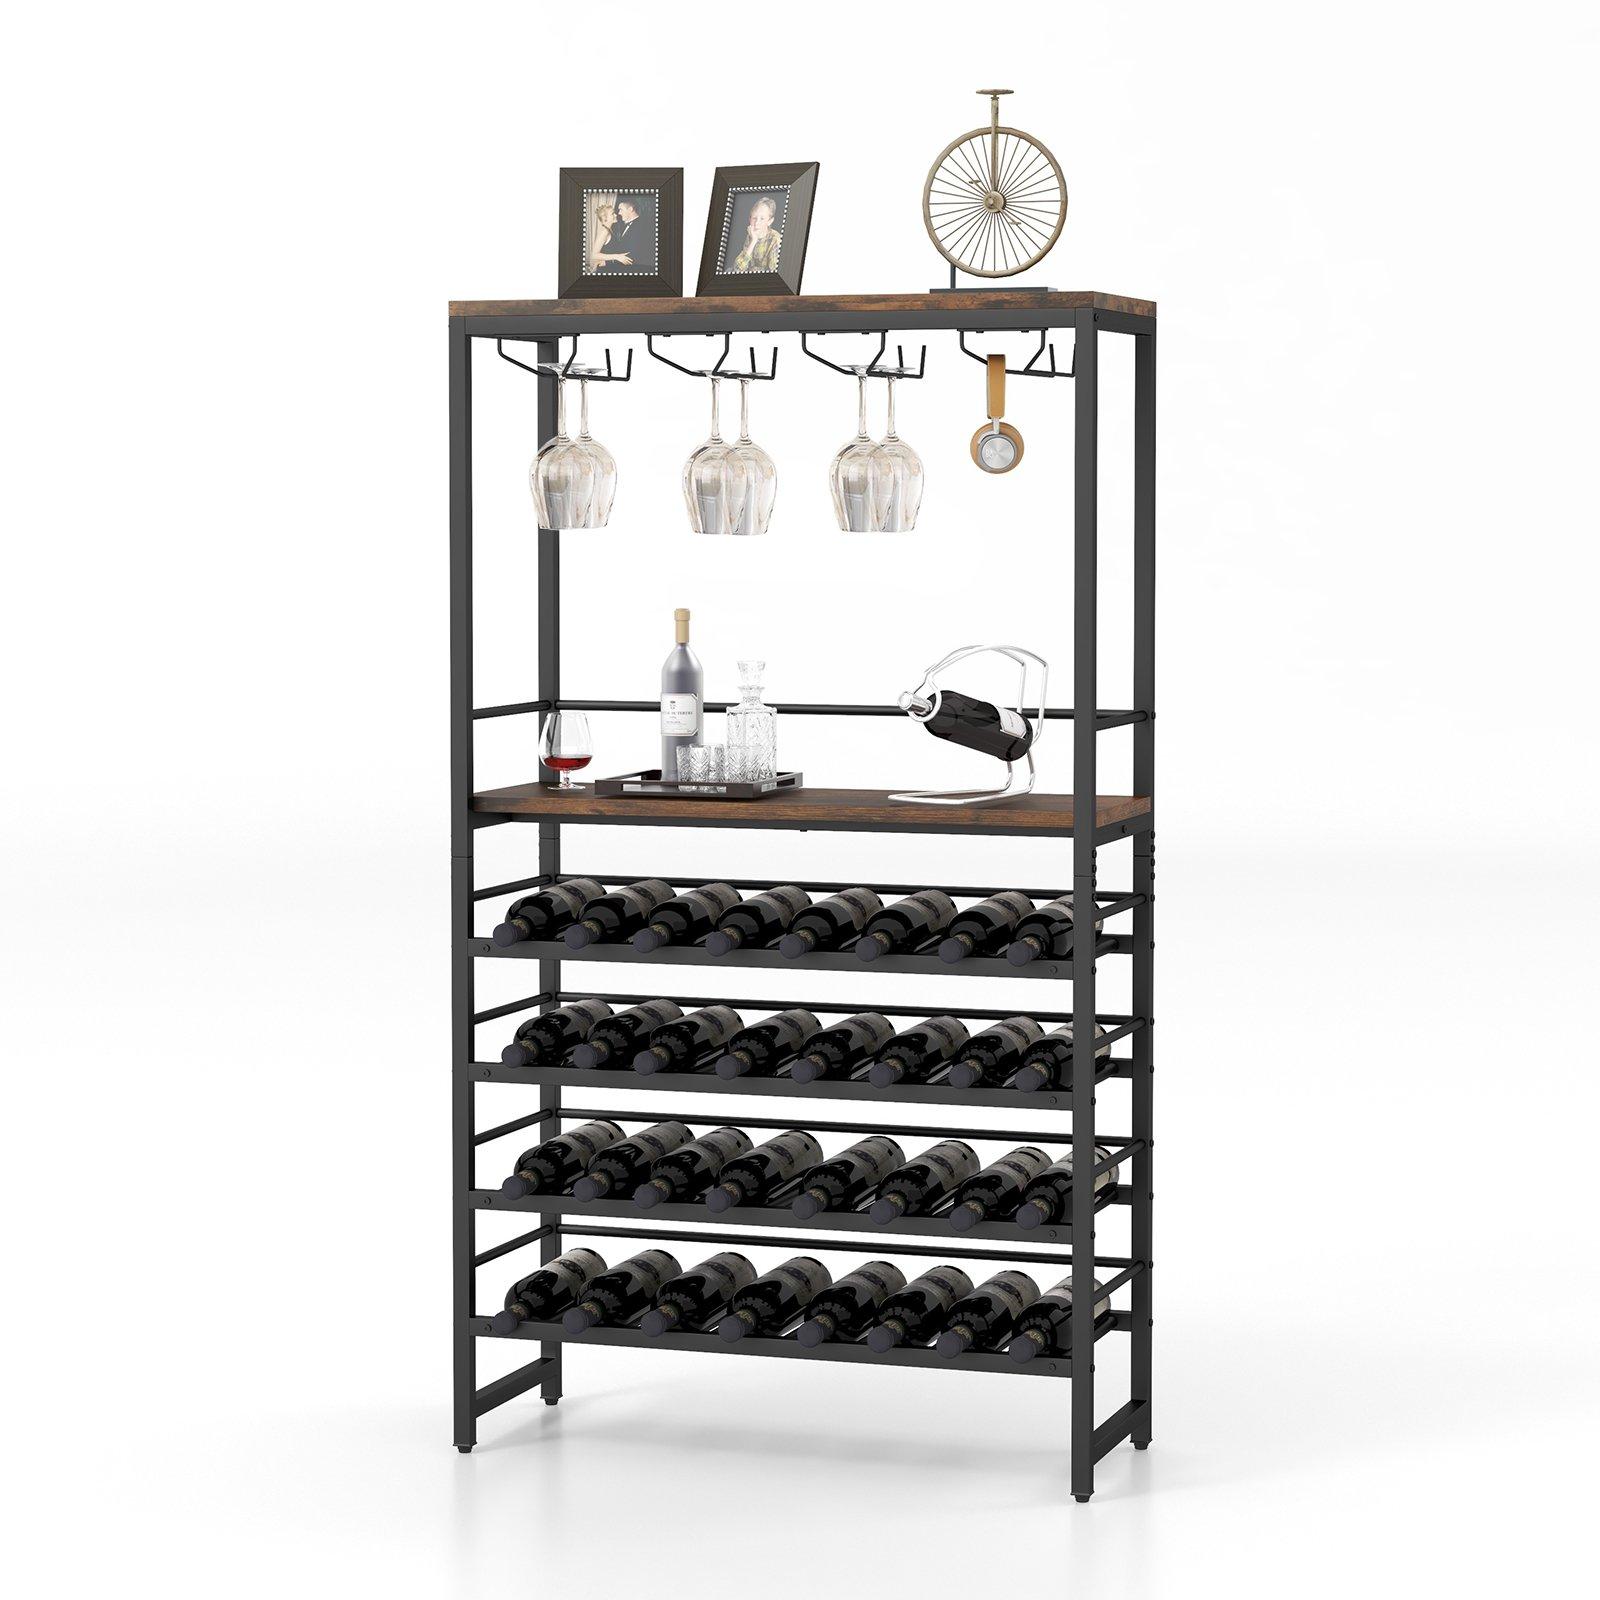 32 Bottles Wine Rack 6-Tier Freestanding Wine Display Holder with Middle Shelf